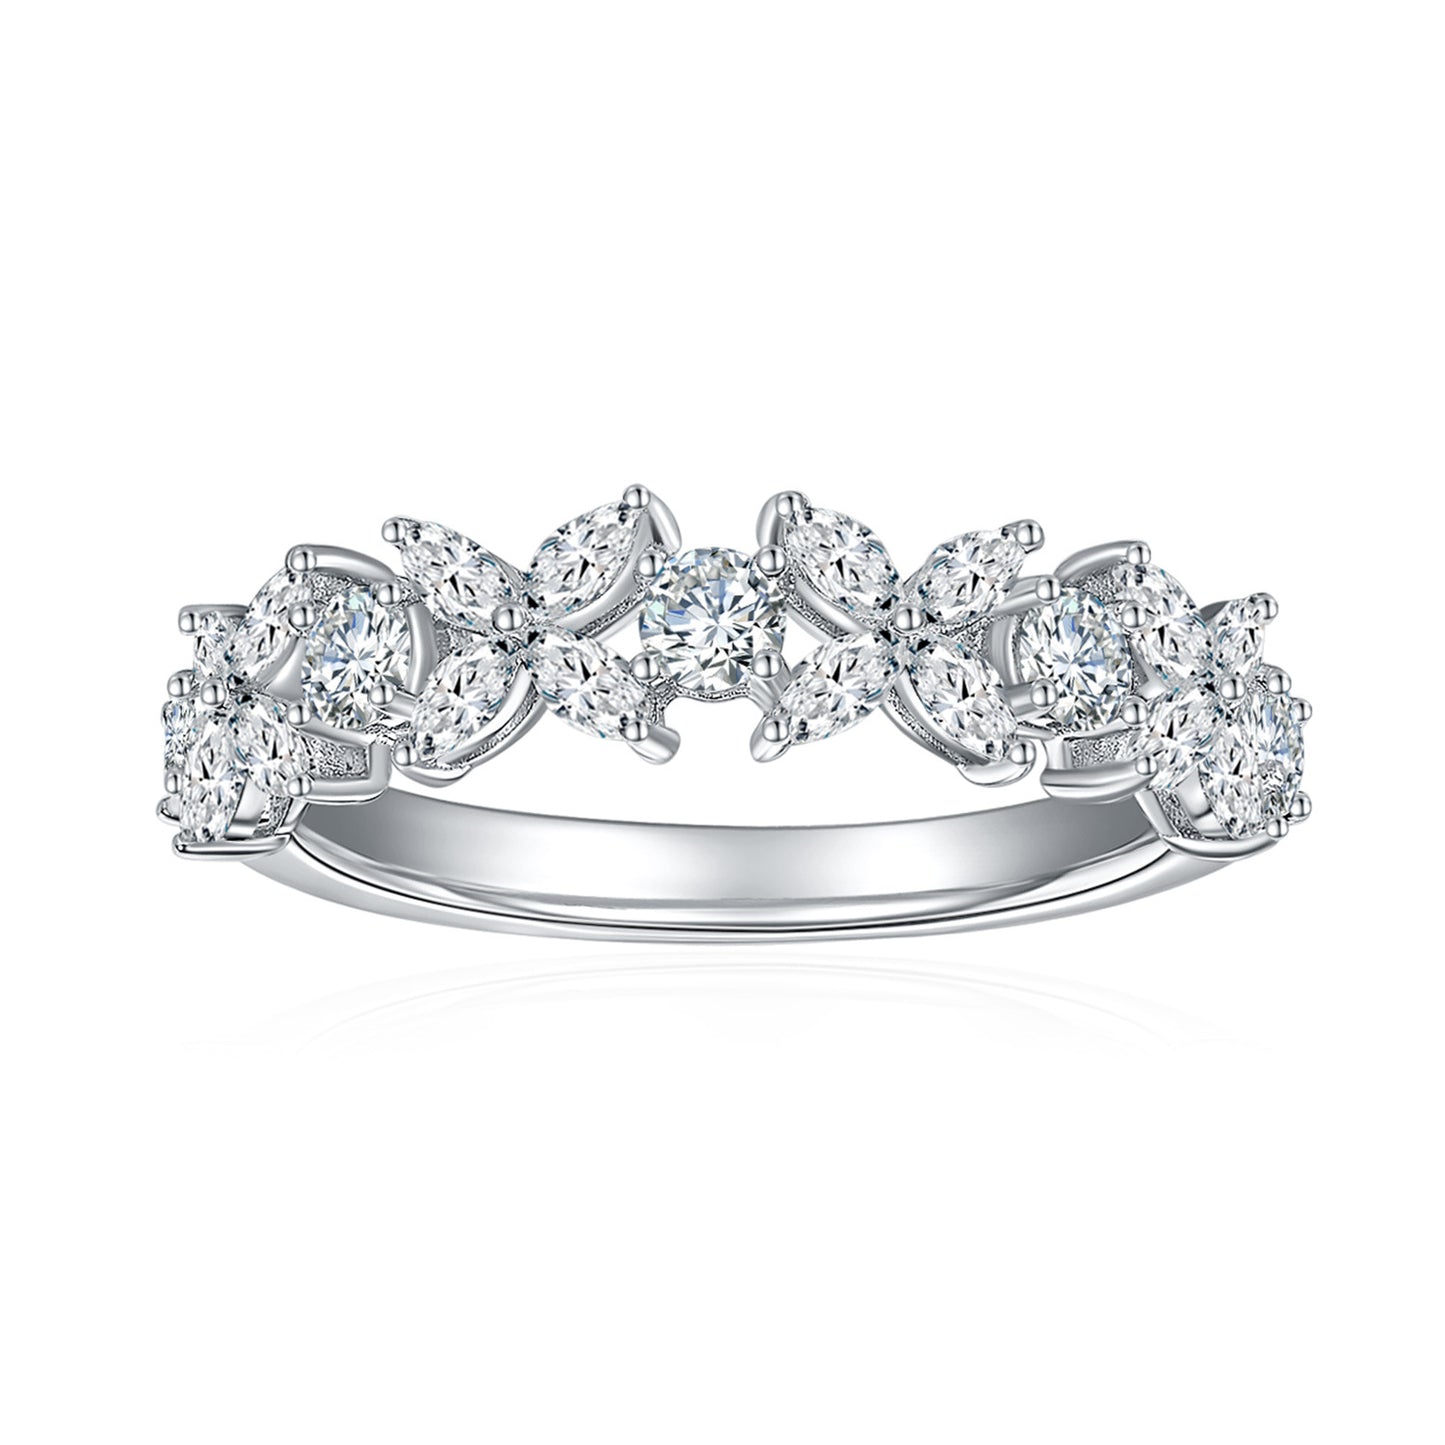 Marquise Moissan, Lucky Clover Diamond Ring, Silver Plated 18K White Gold, Half Diamond Row Ring, Versatile